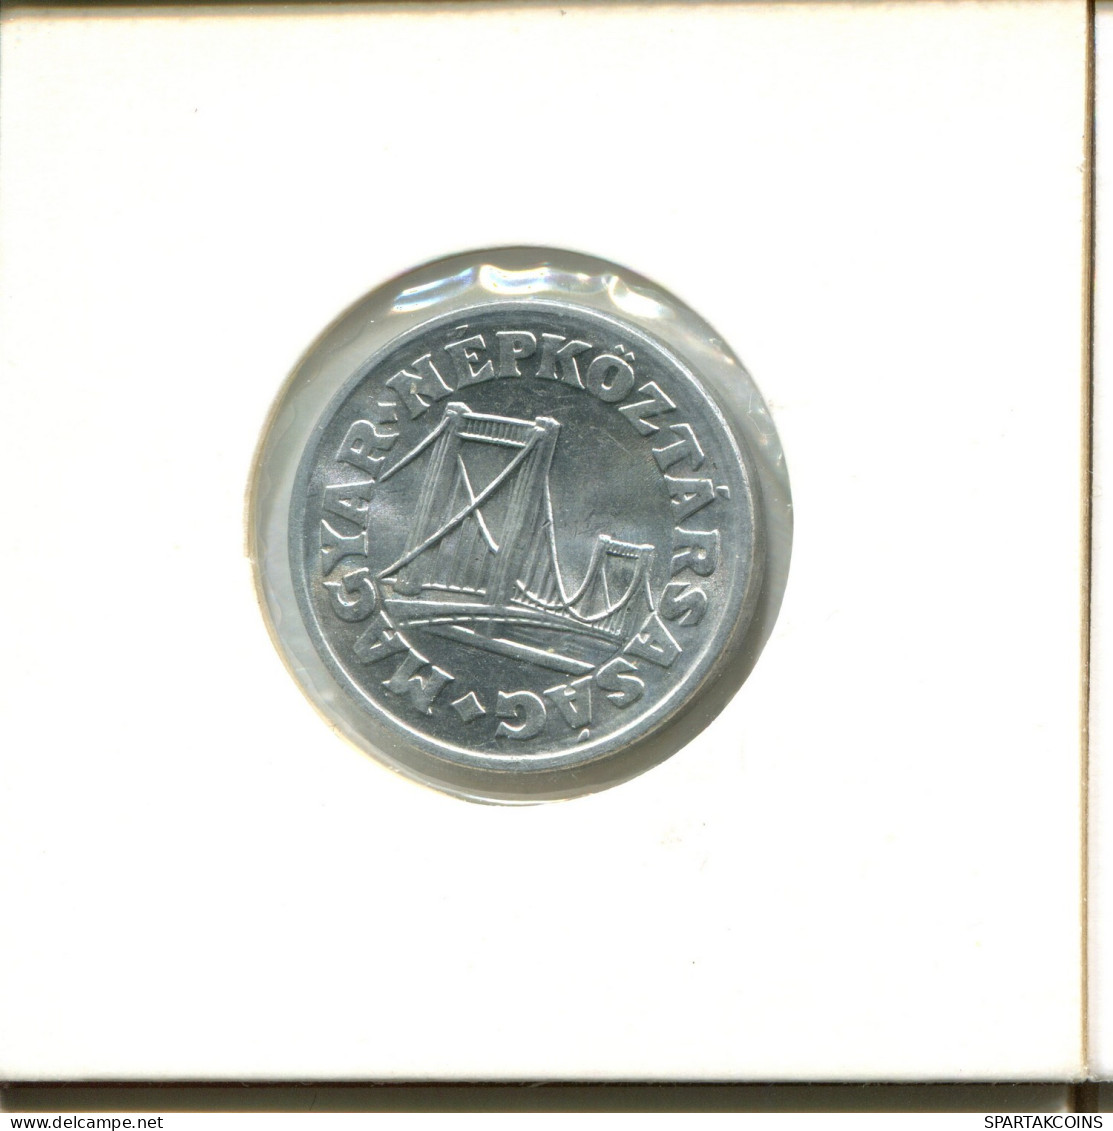 50 FILLER 1982 HUNGARY Coin #AY230.2.U.A - Hongarije